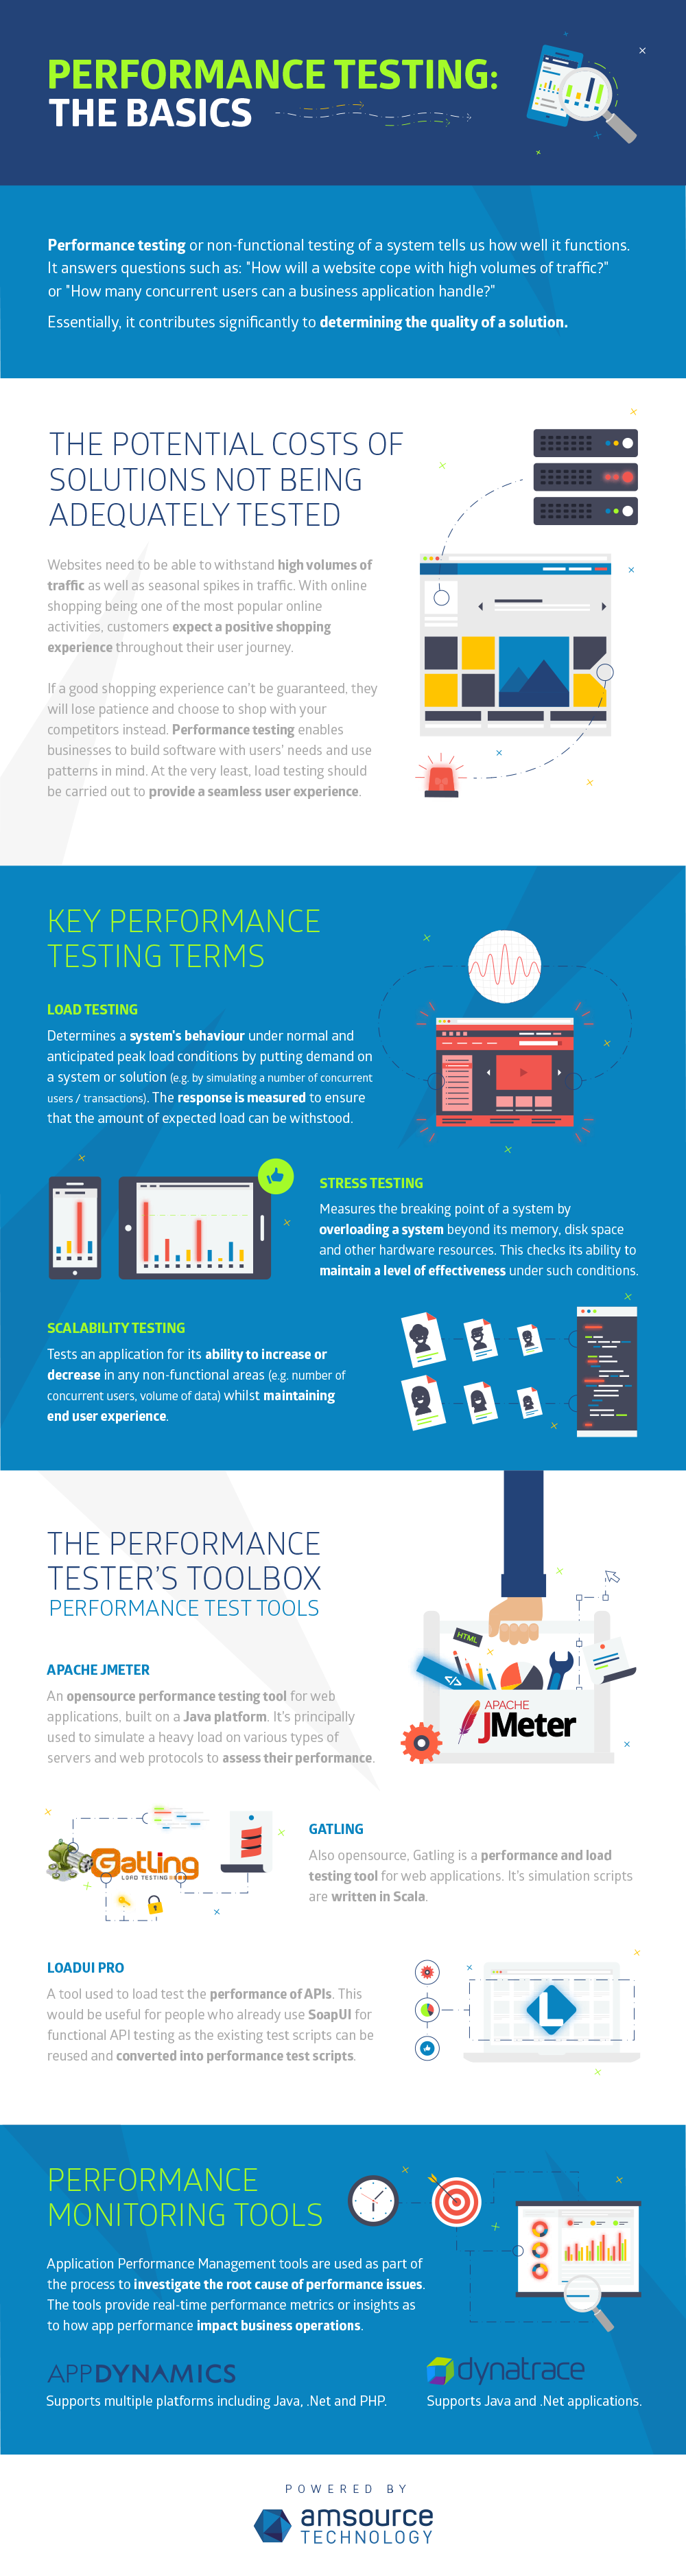 Performance Testing Basics